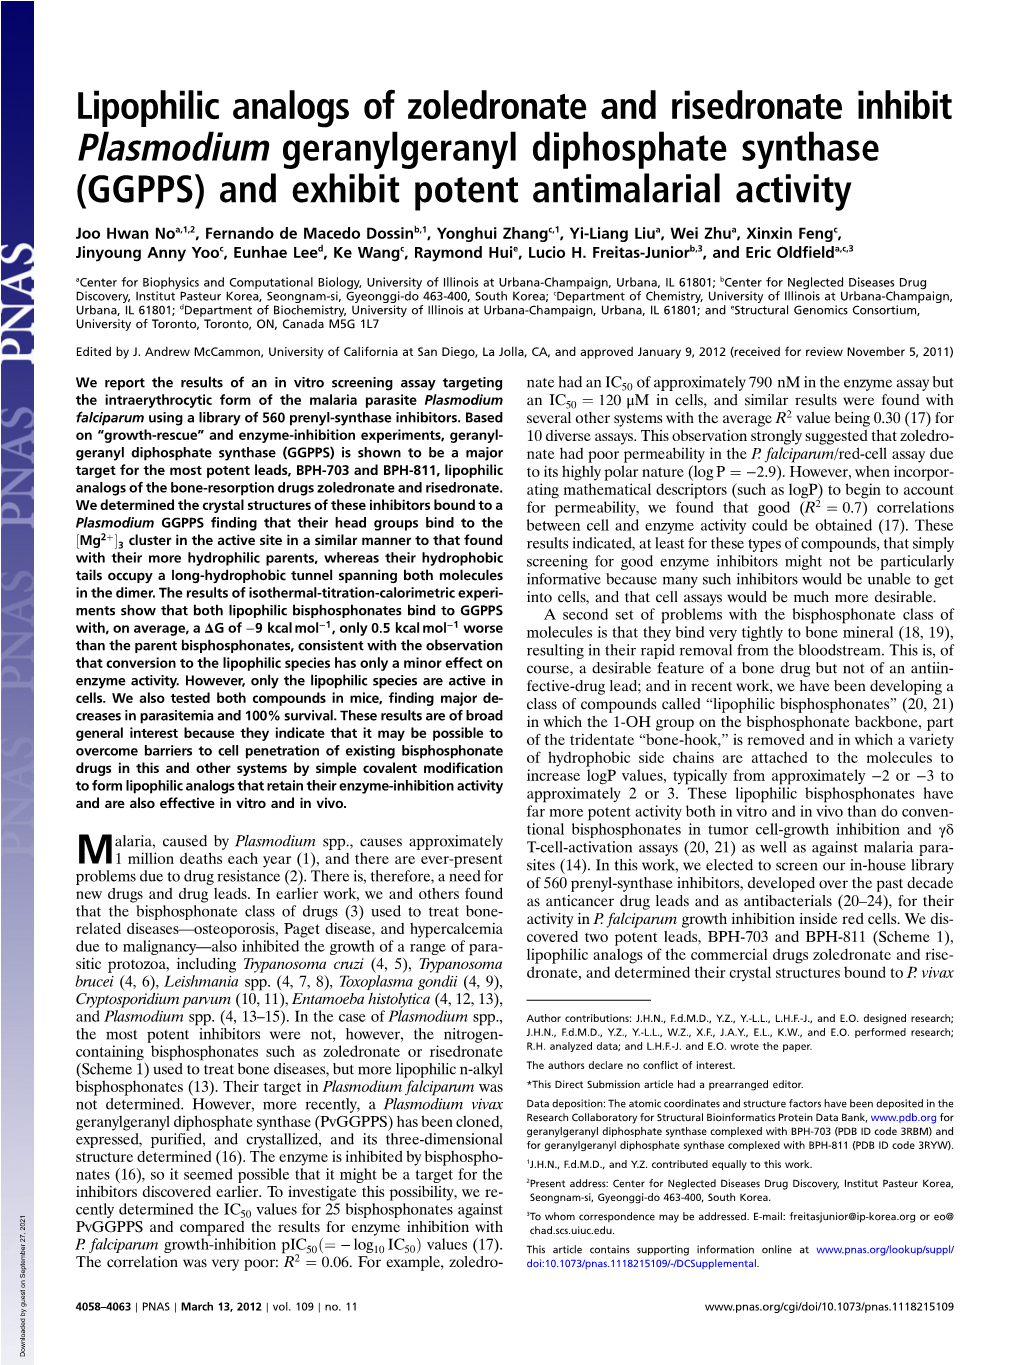 Plasmodium Geranylgeranyl Diphosphate Synthase (GGPPS) and Exhibit Potent Antimalarial Activity